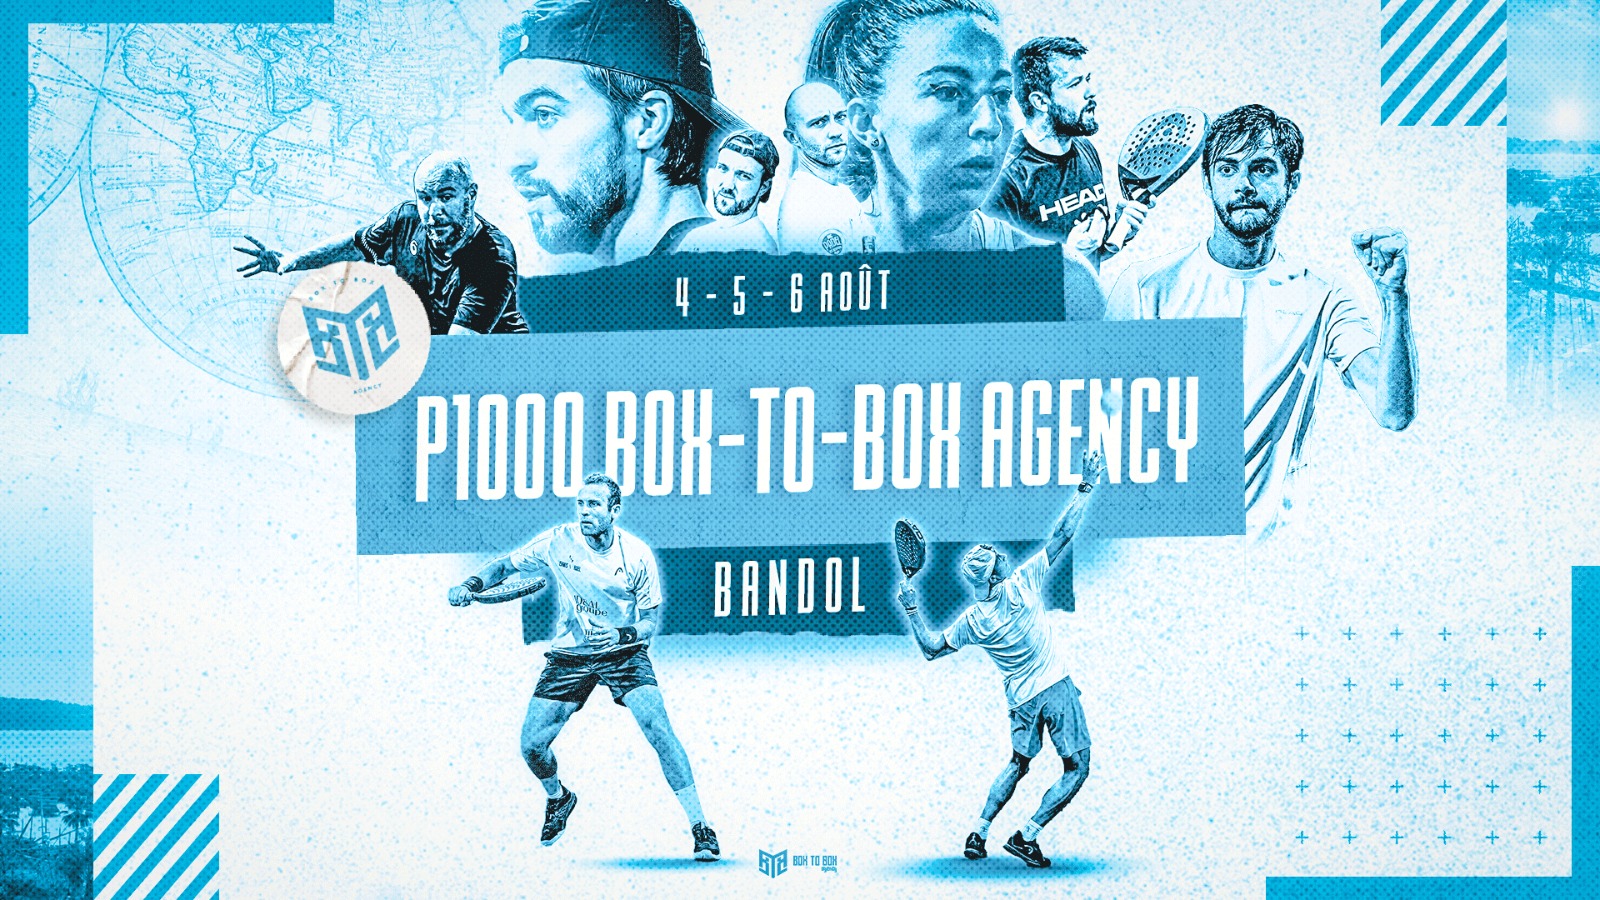 Öppna P1000 Box-to-Box Agency Finals – Bandol